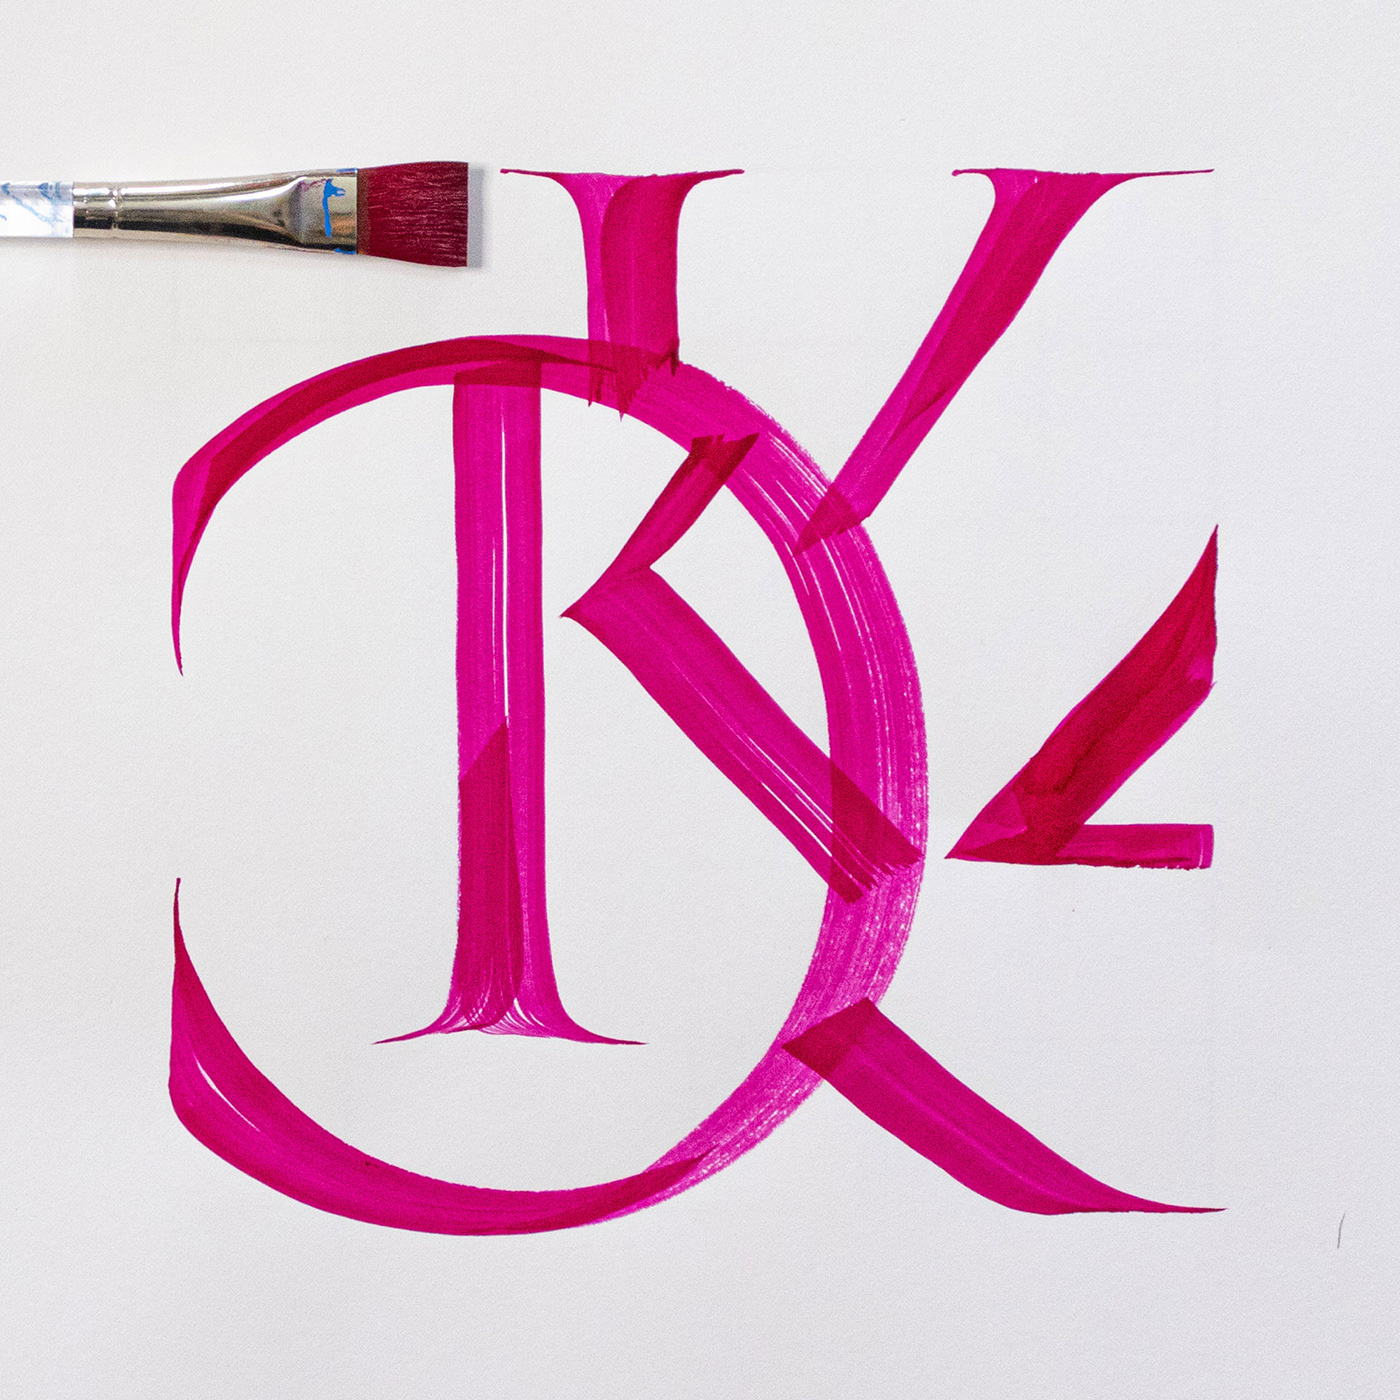 artwork Calligraphy   Digital Art  graphic design  handmade handwritten ILLUSTRATION  lettering painting   typography  